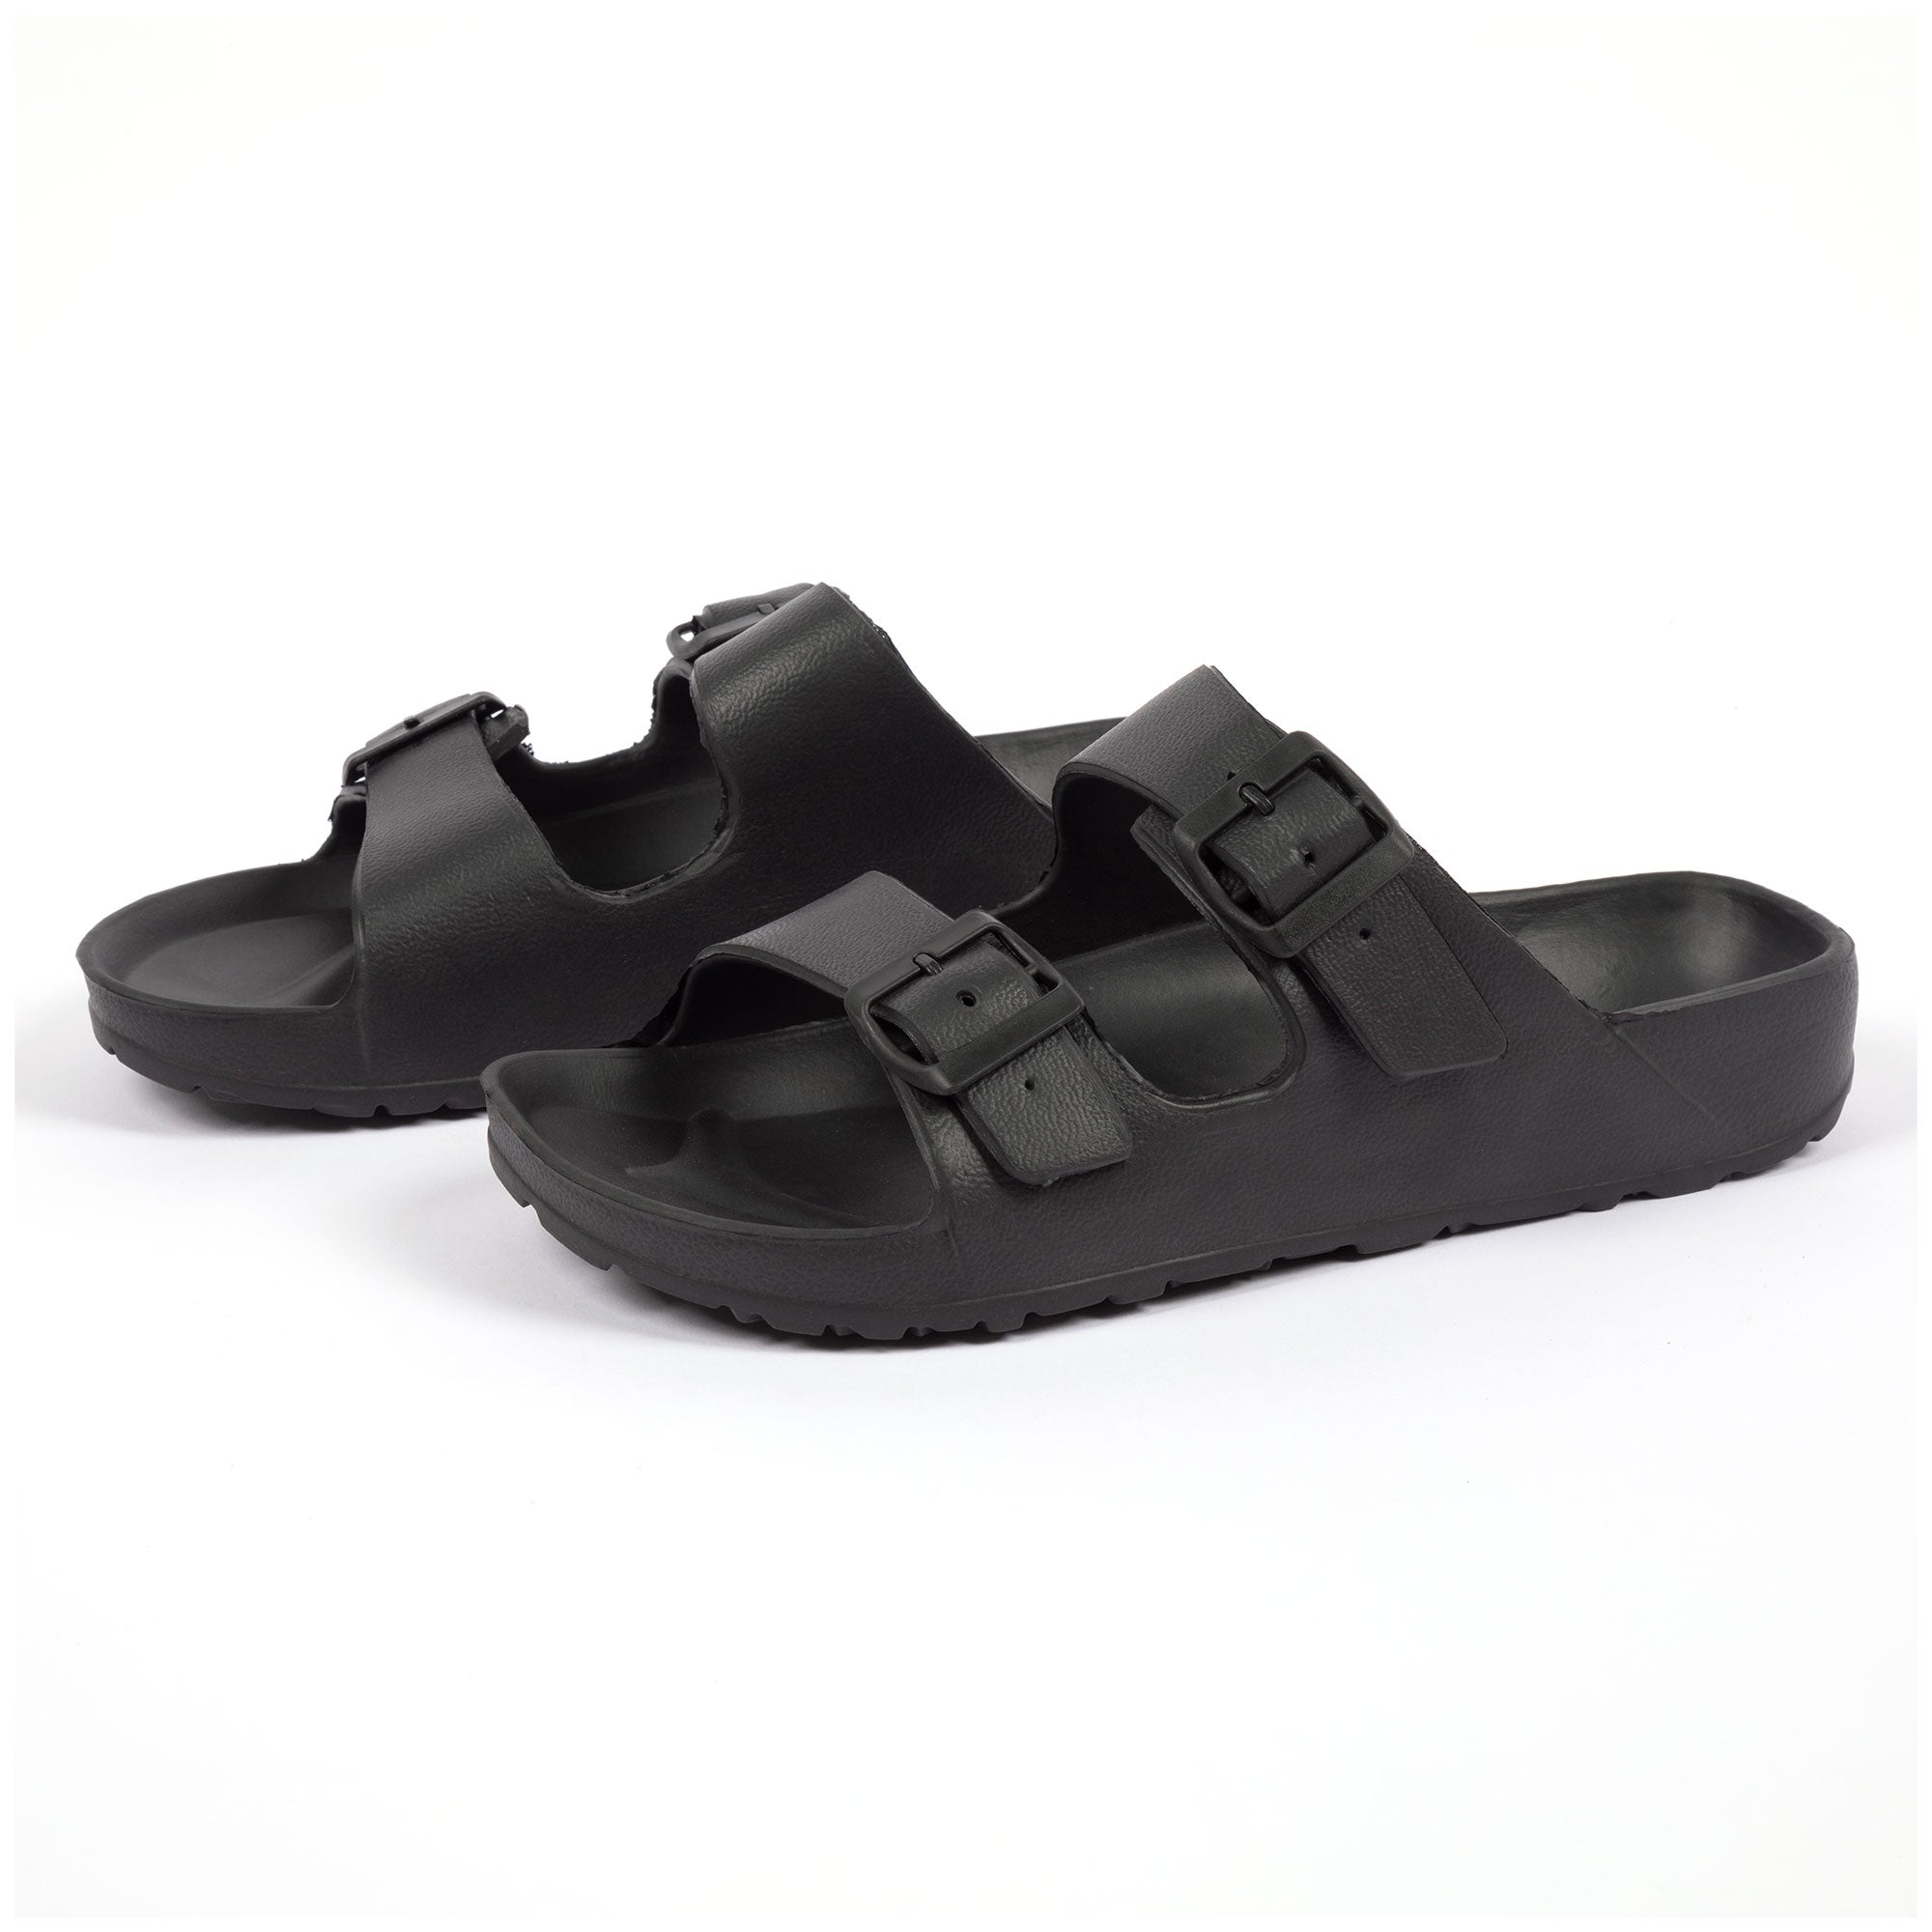 Men's Double Buckle Slide Sandals - Black - 8